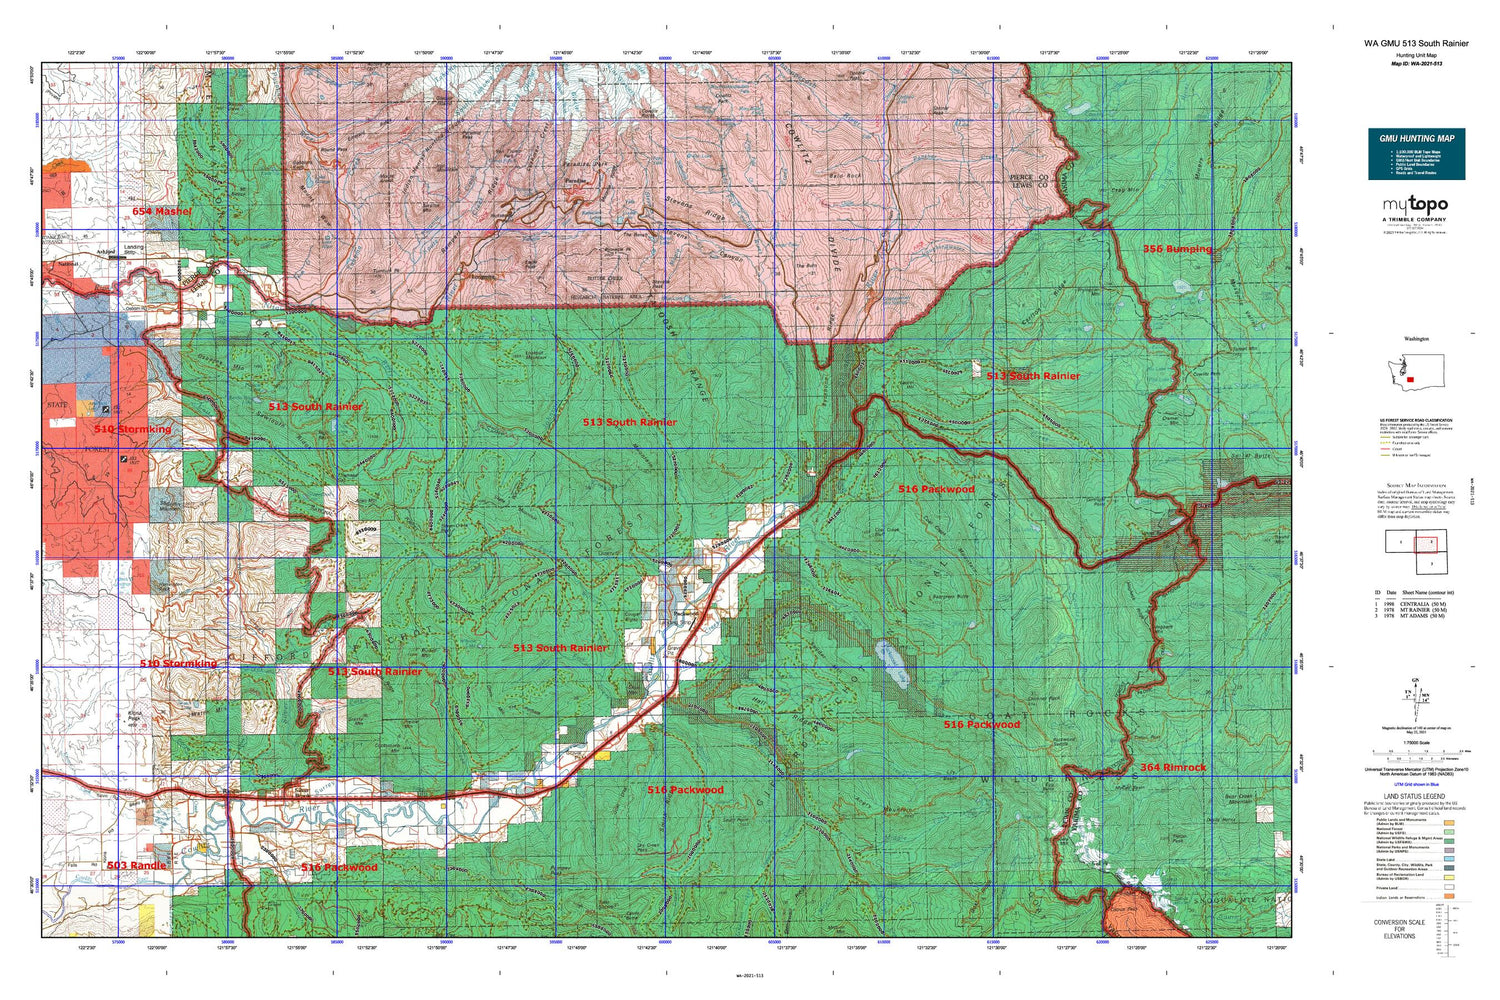 Washington GMU 513 South Rainier Map Image